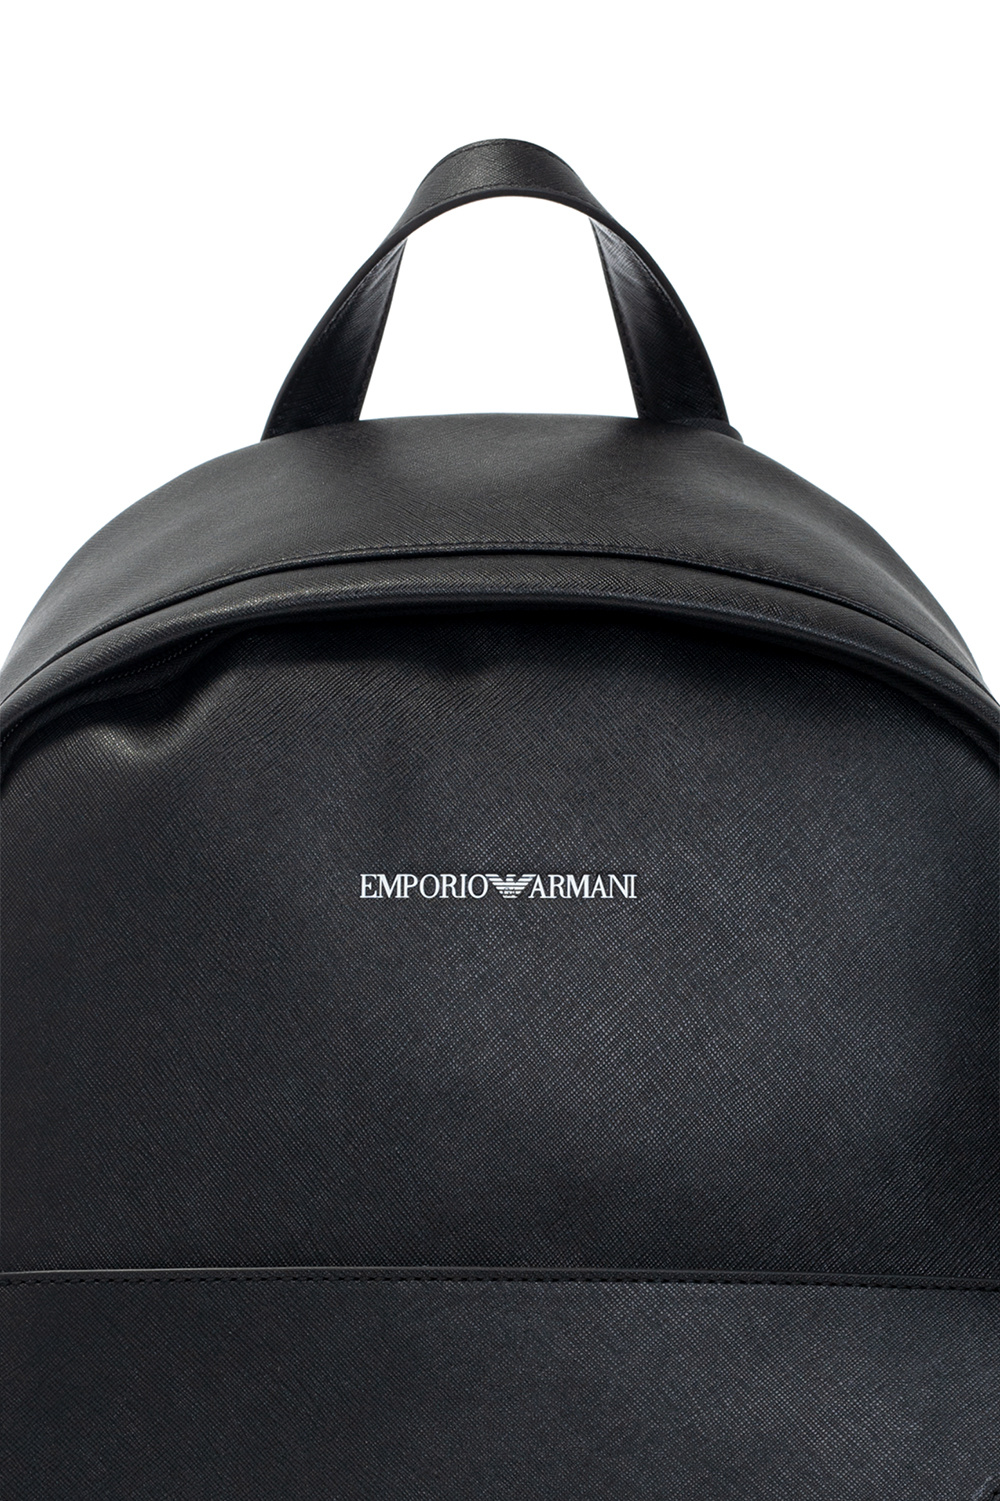 IetpShops Thailand - buy emporio armani embellished eg3433221 logo